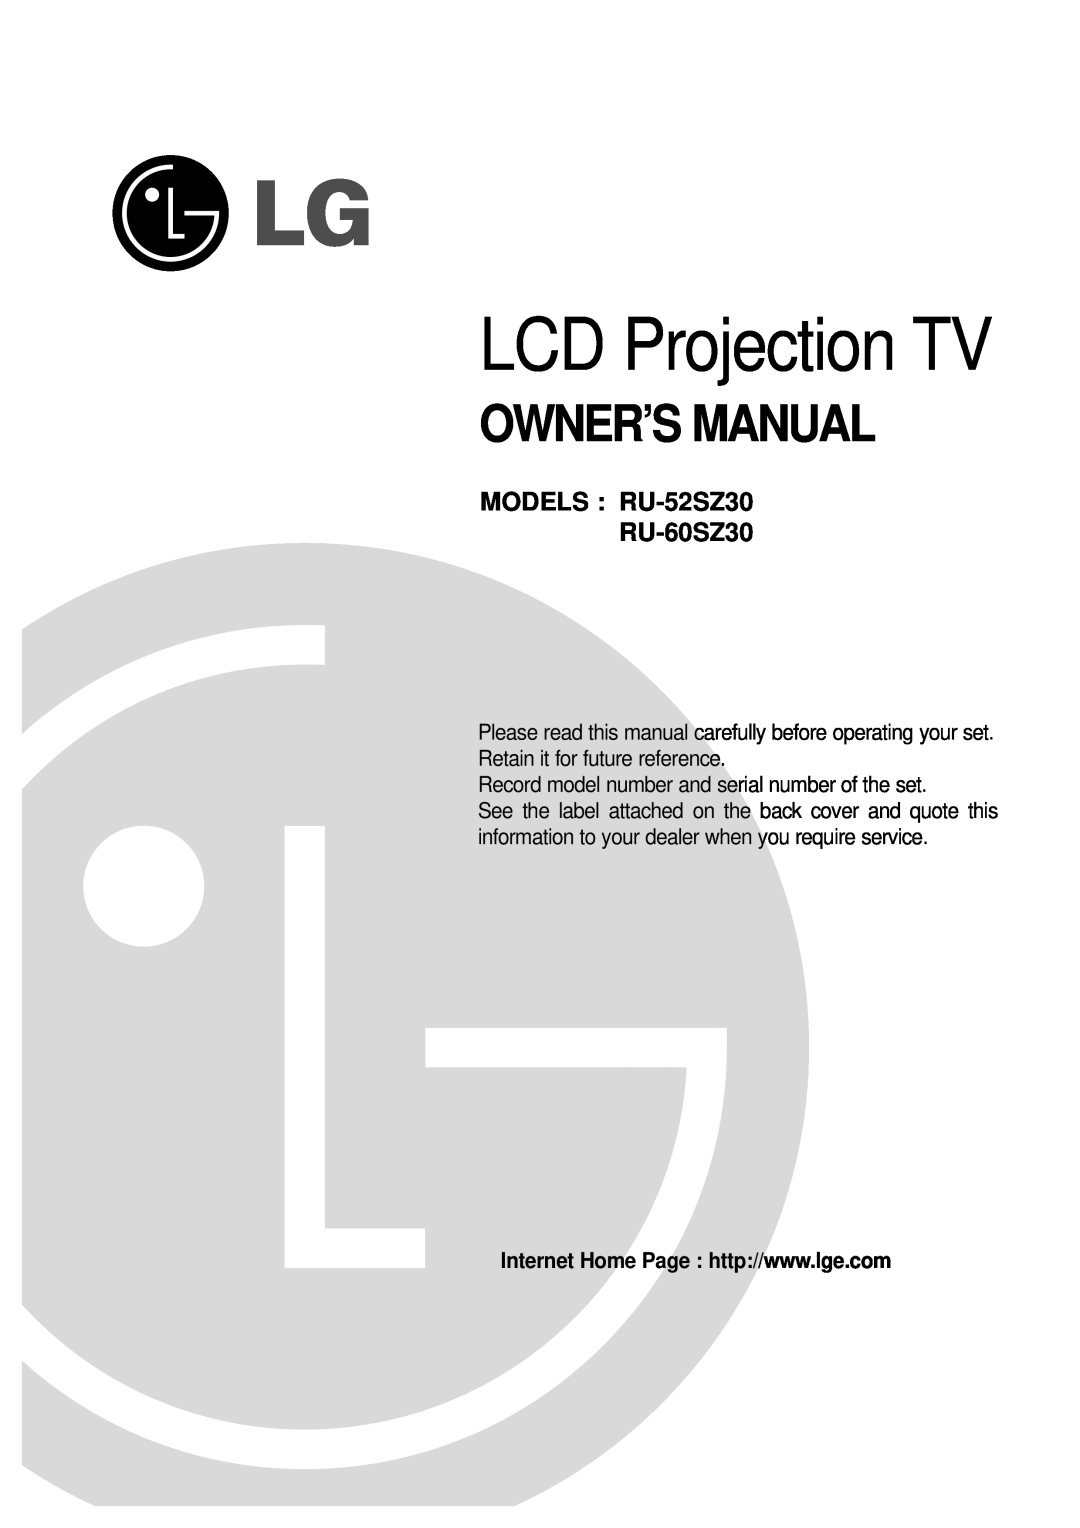 LG Electronics owner manual LCD Projection TV, Owner’S Manual, MODELS RU-52SZ30 RU-60SZ30 